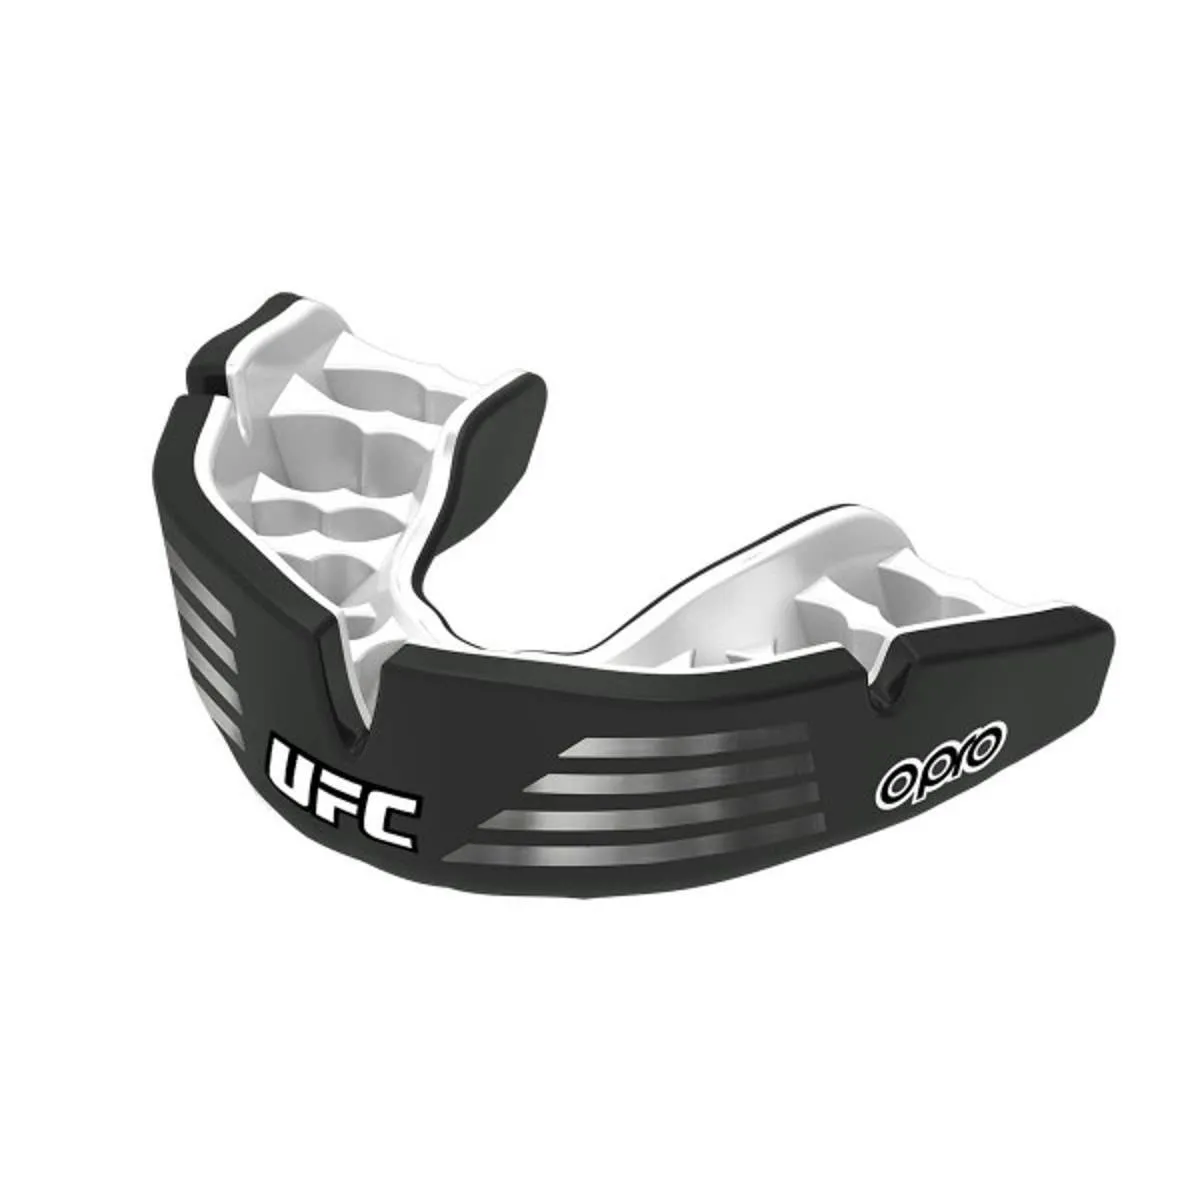 Protège-dents OPRO "UFC" Insten Custom FIT noir/argent